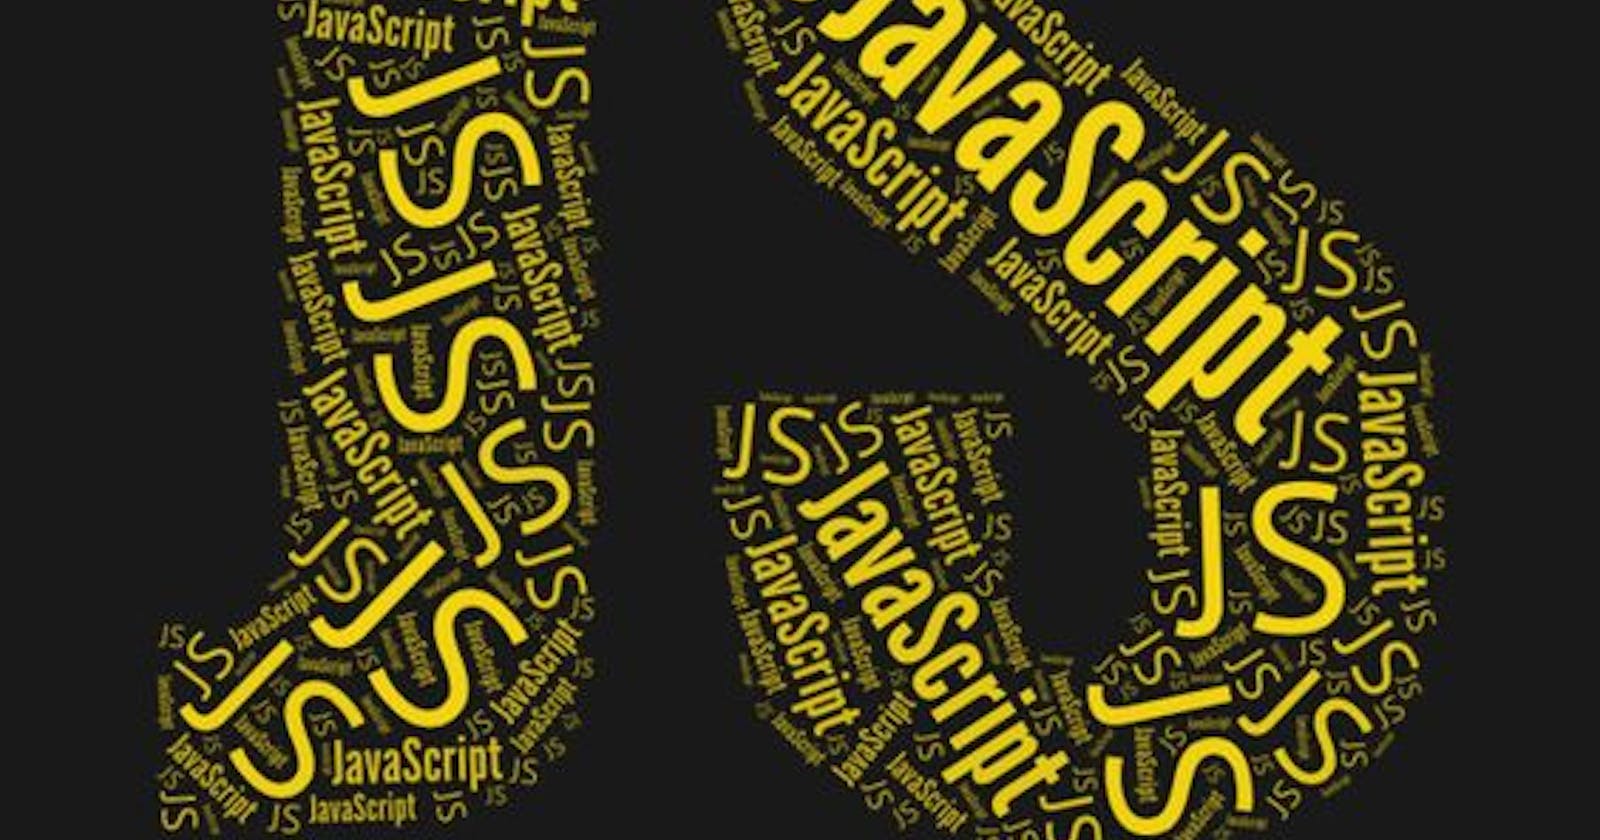 JavaScript - The Language that Built the World